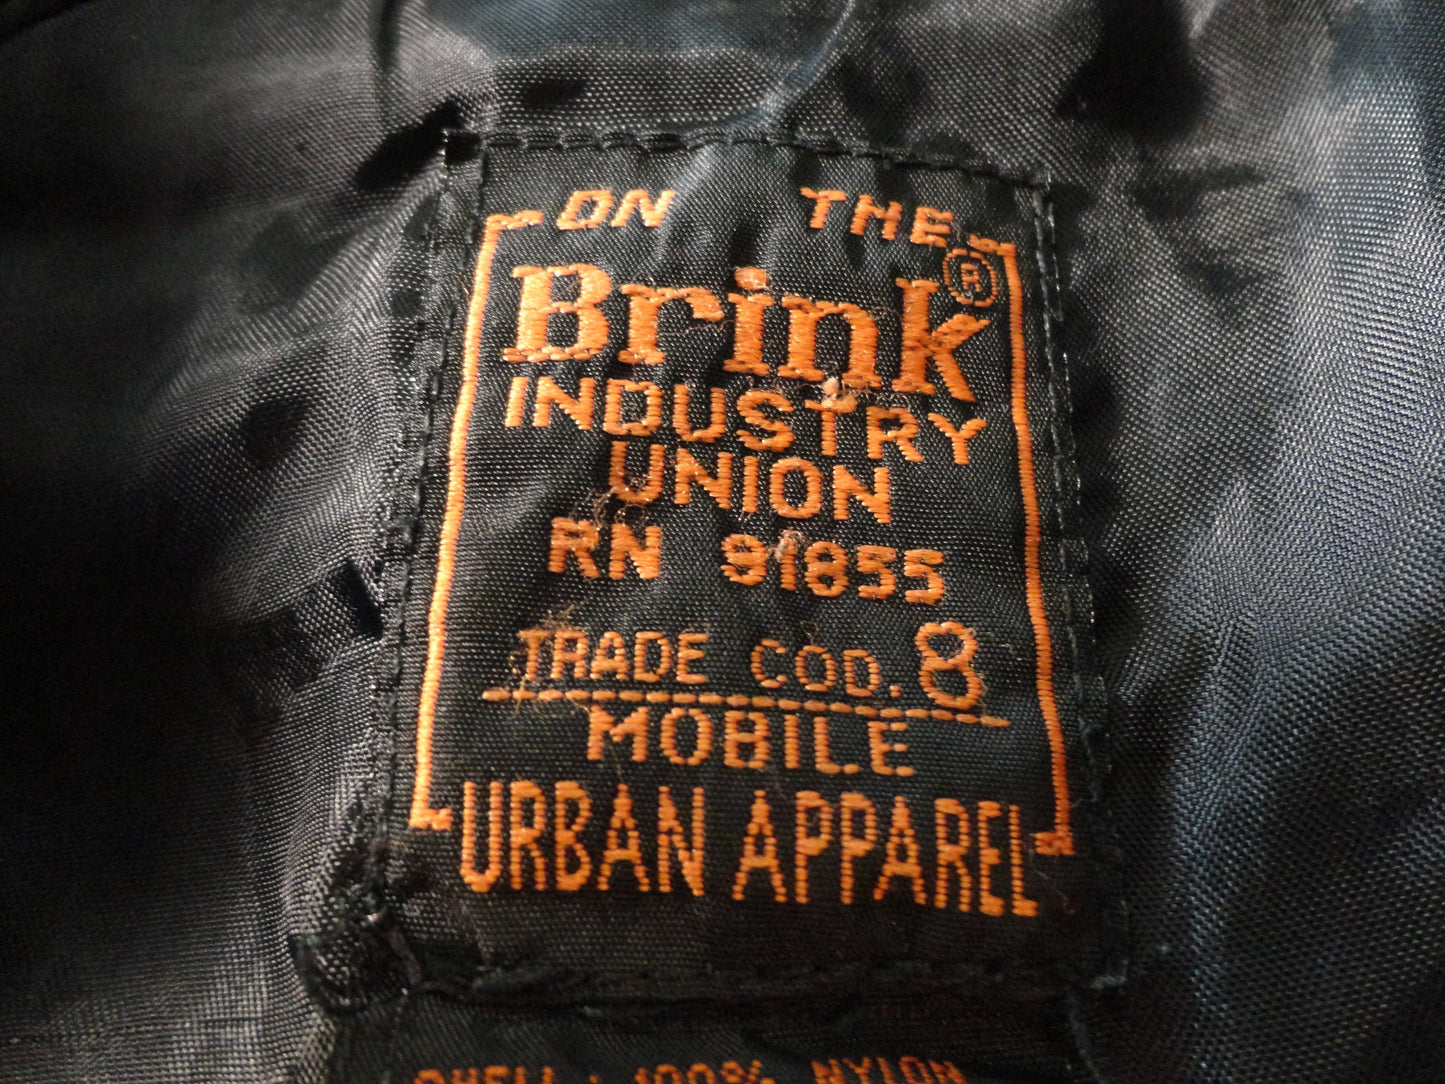 Men's On The Brink 80's leeveless Jacket Black Size L SKU 000166